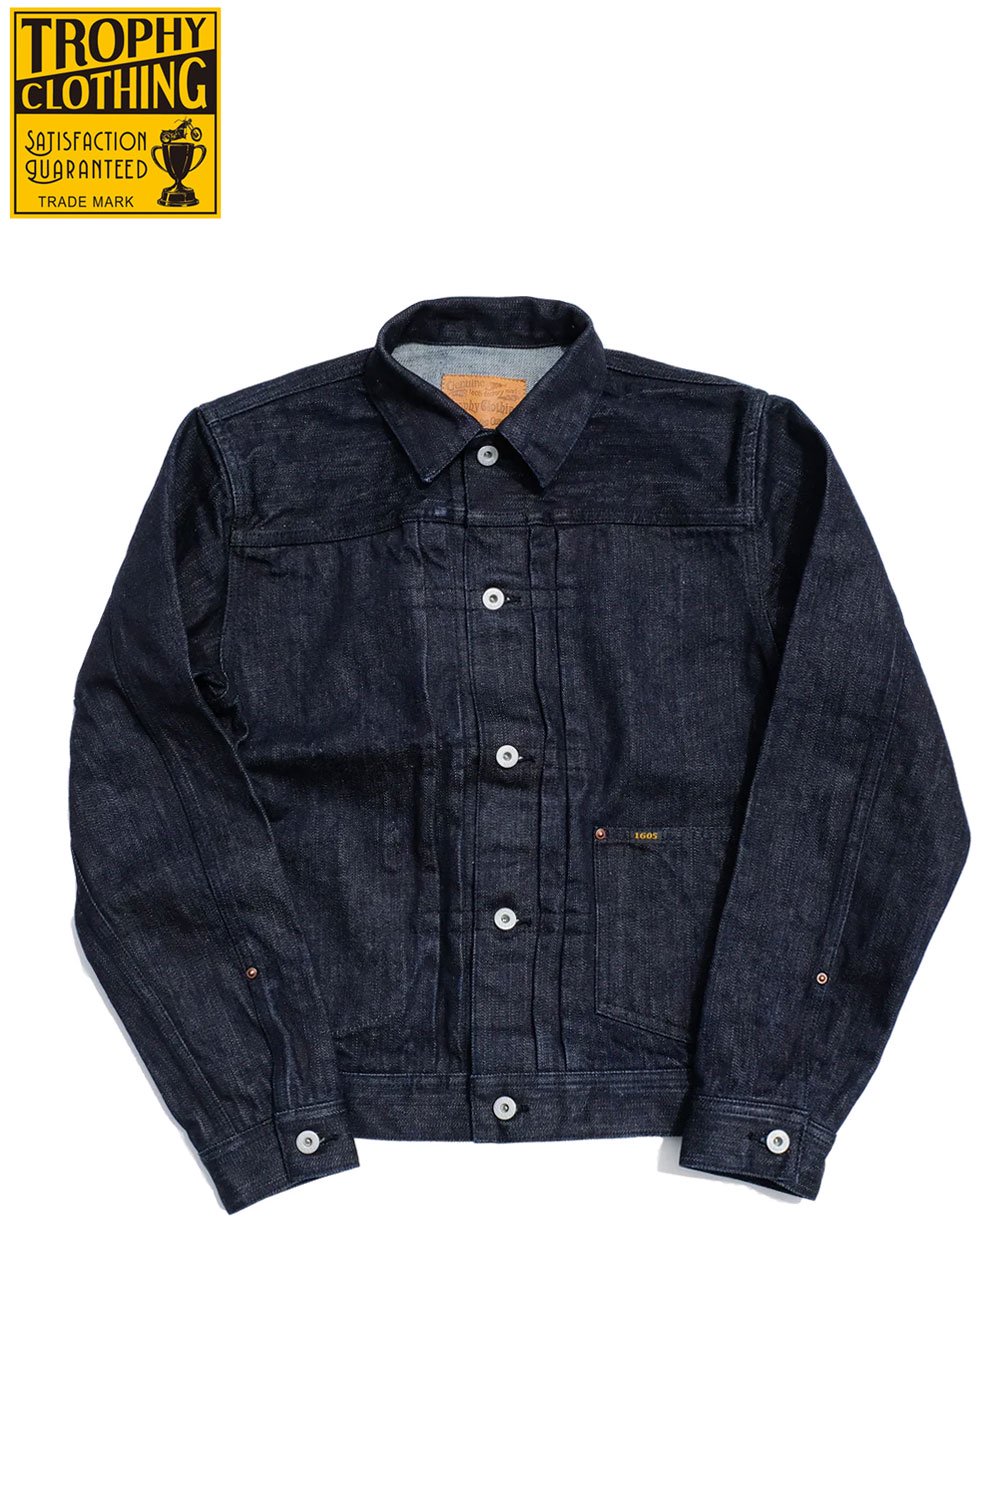 TROPHY CLOTHING(トロフィークロージング) デニムジャケット 2705 Button Jacket Garage Denim  通販正規取扱 | ハーレムストア公式通販サイト